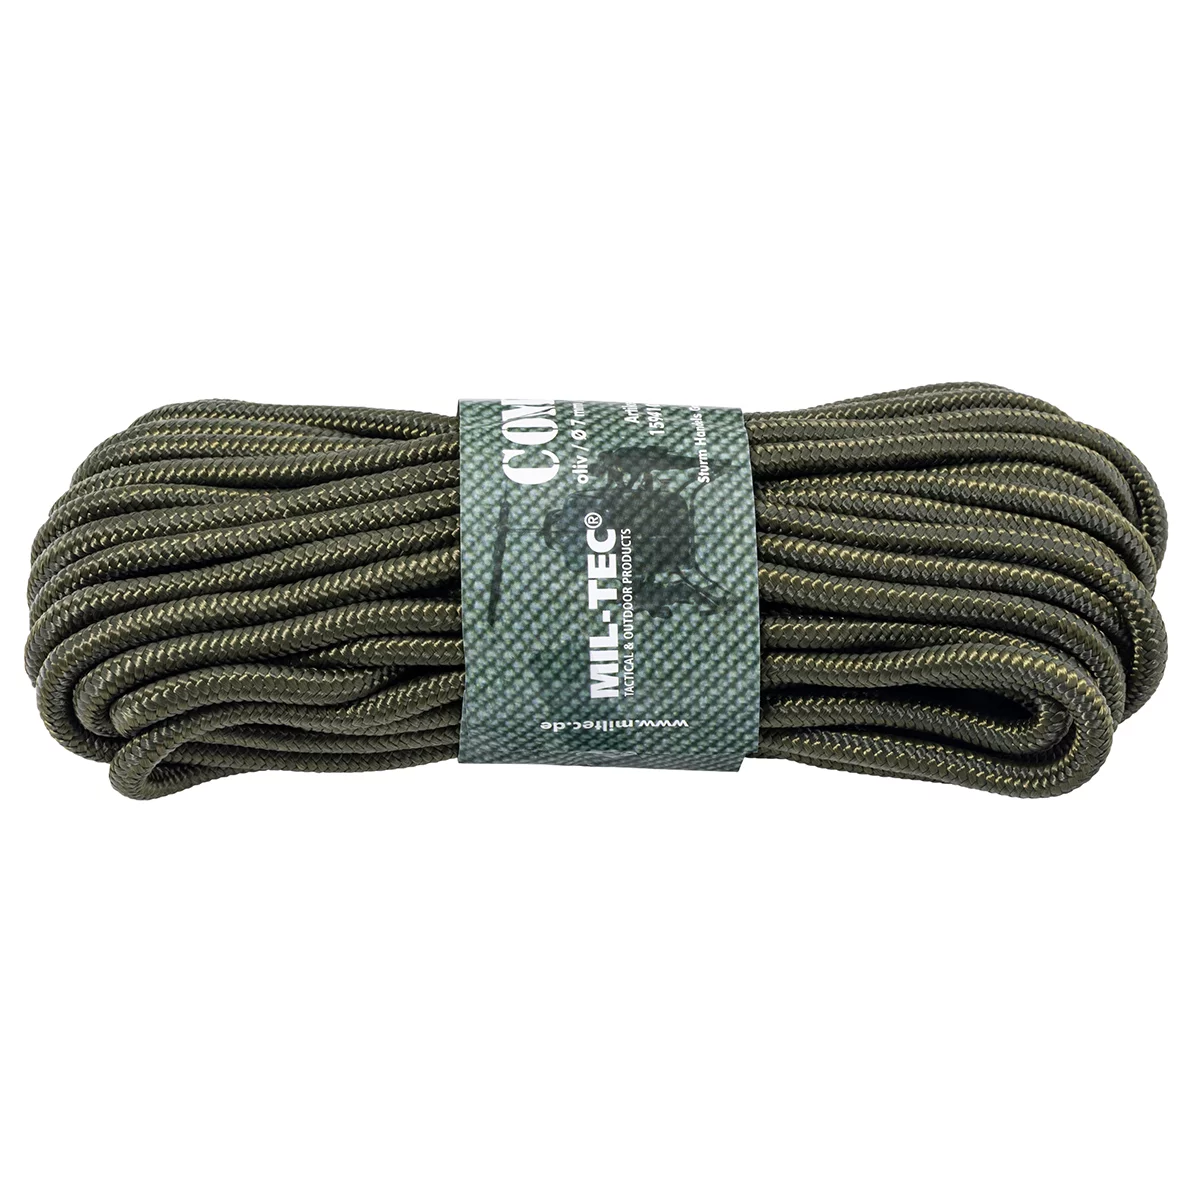 Мотузка MIL-TEC Commando Rope 15 м. Олива 2